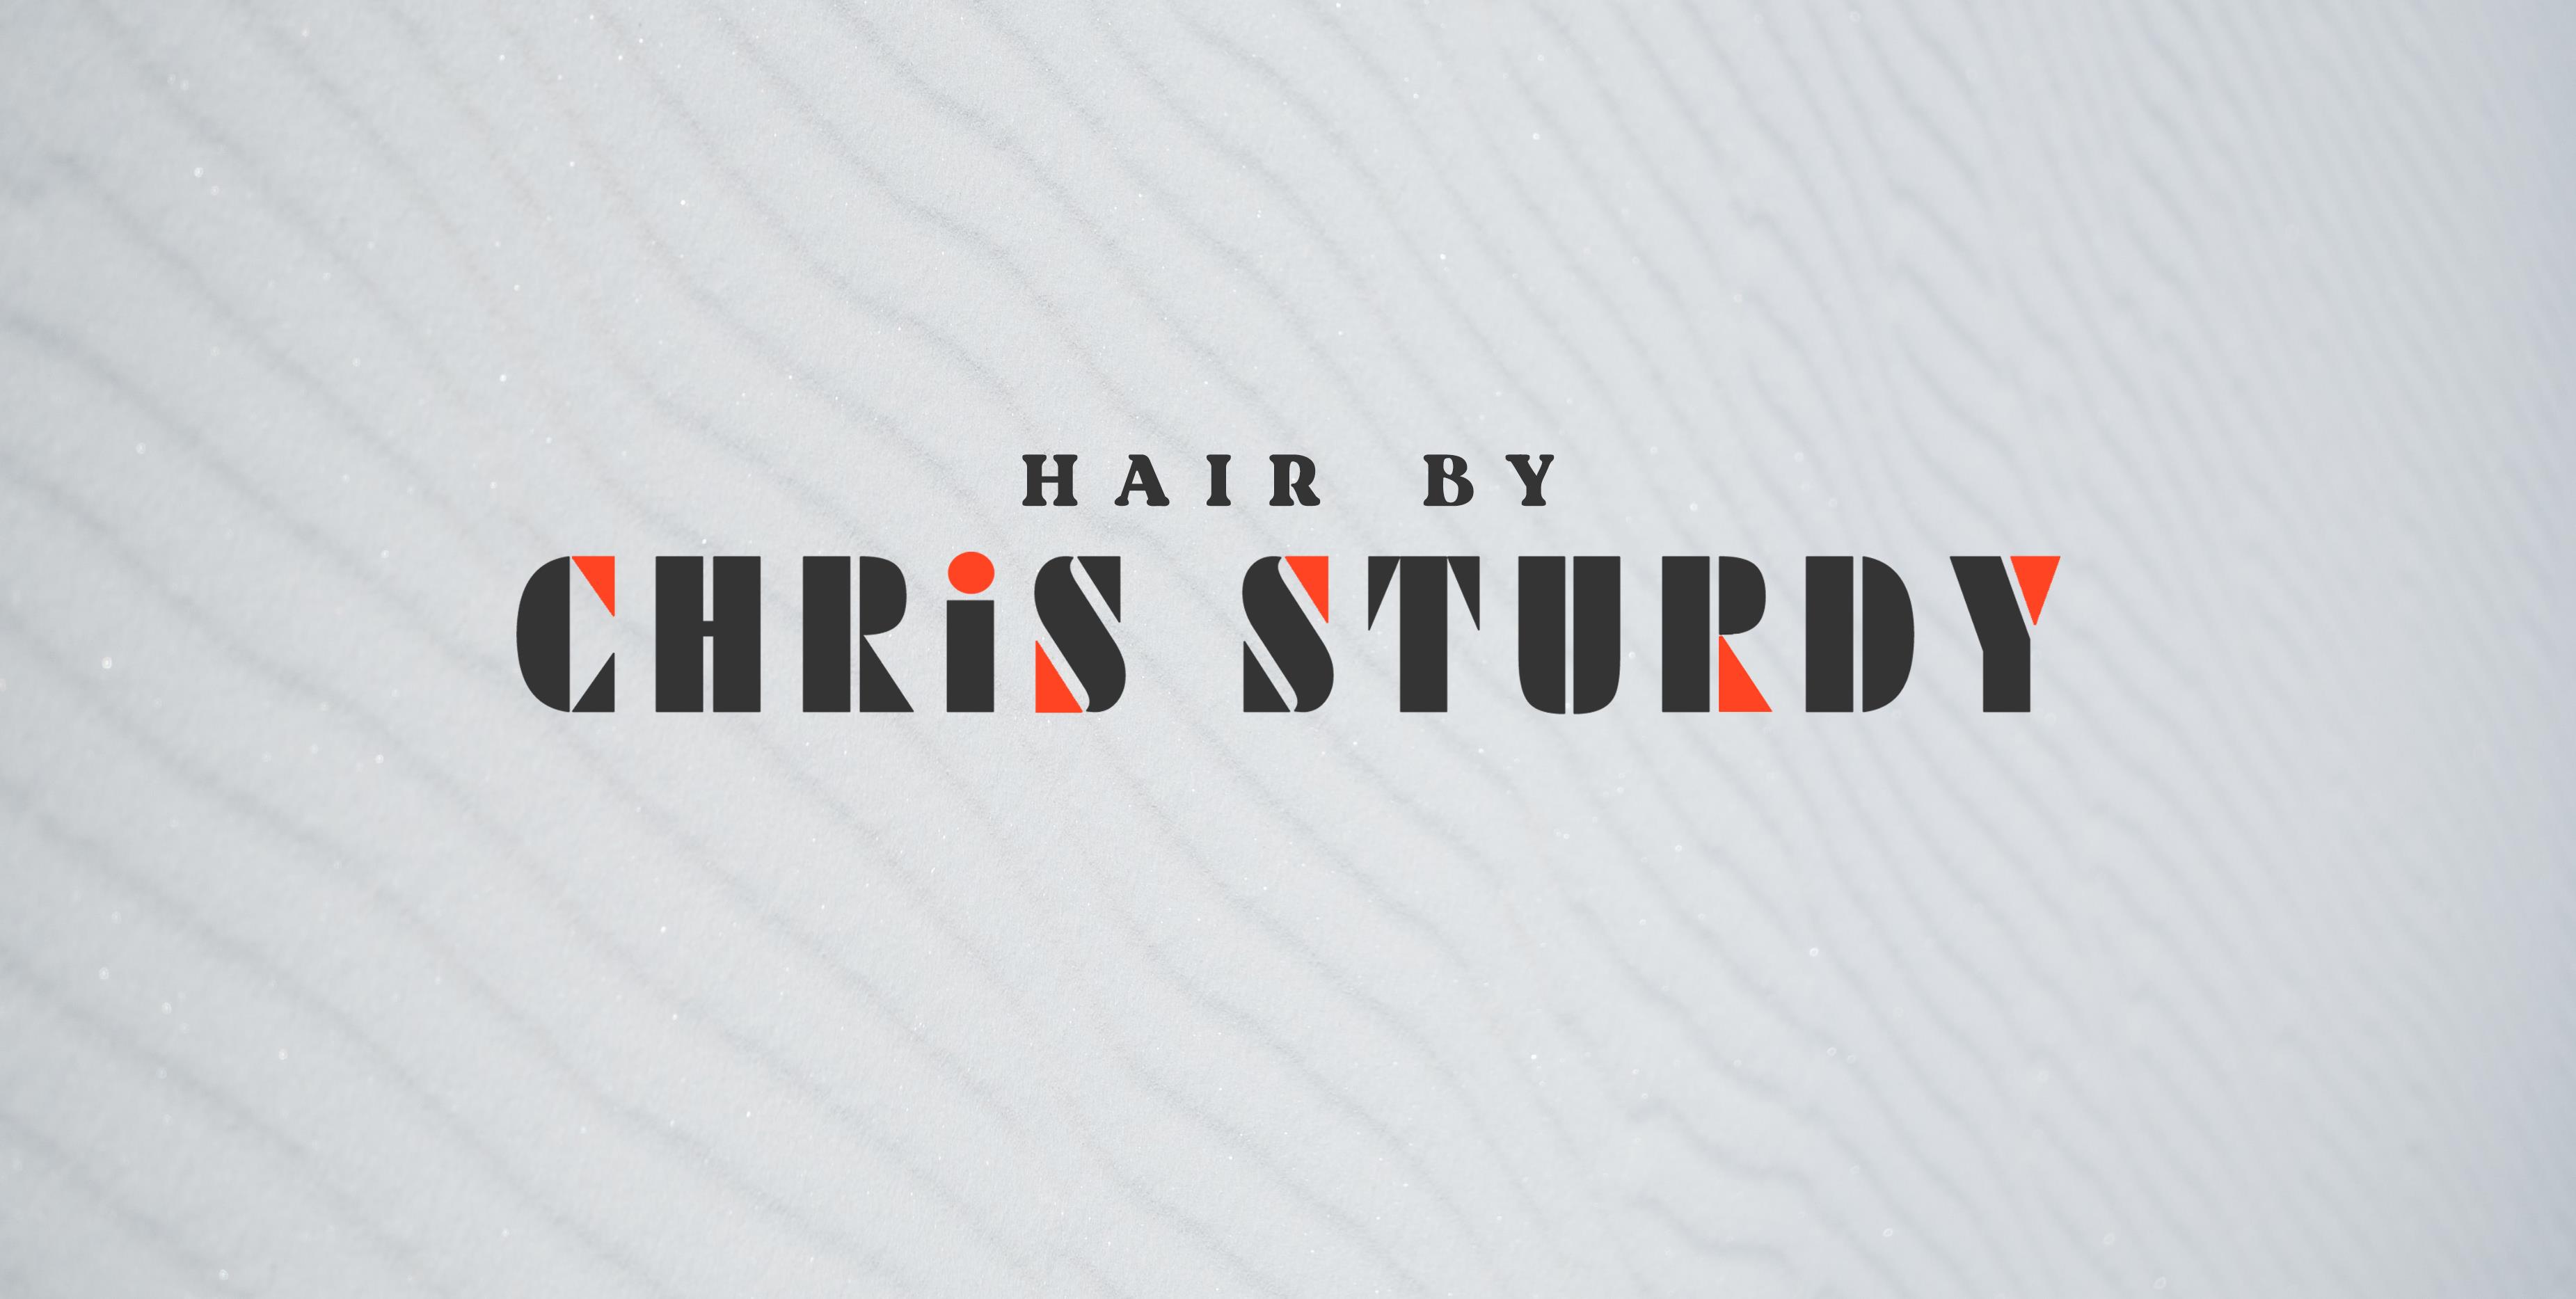 Hair by Chris Sturdy